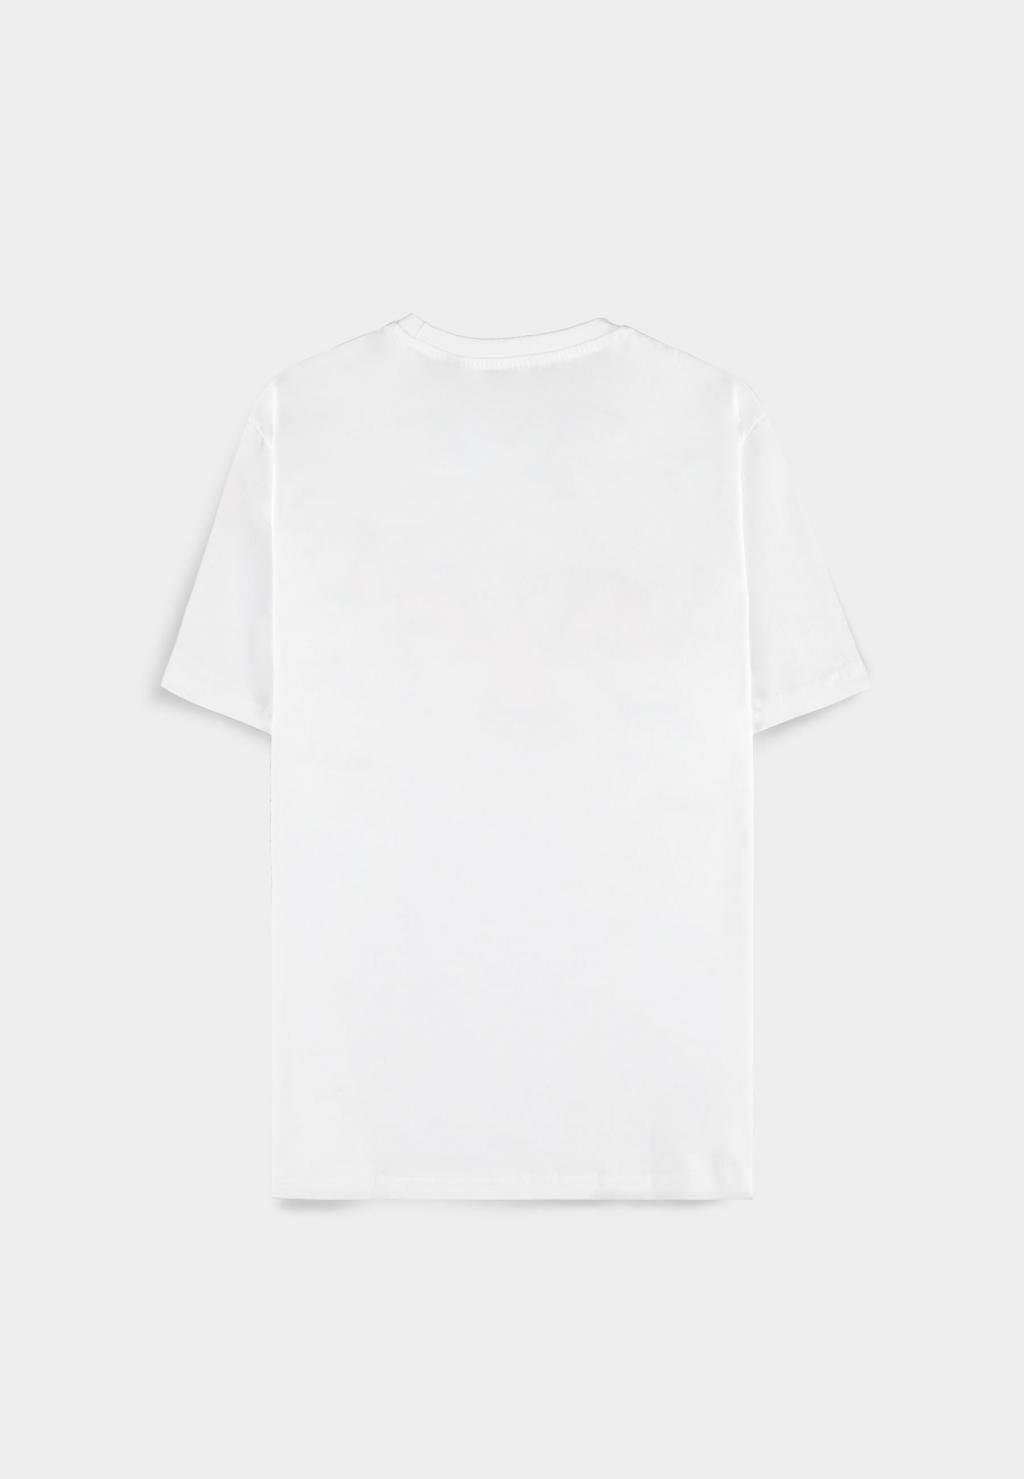 POKEMON - Dracaufeu #006 - T-Shirt Herren (S)